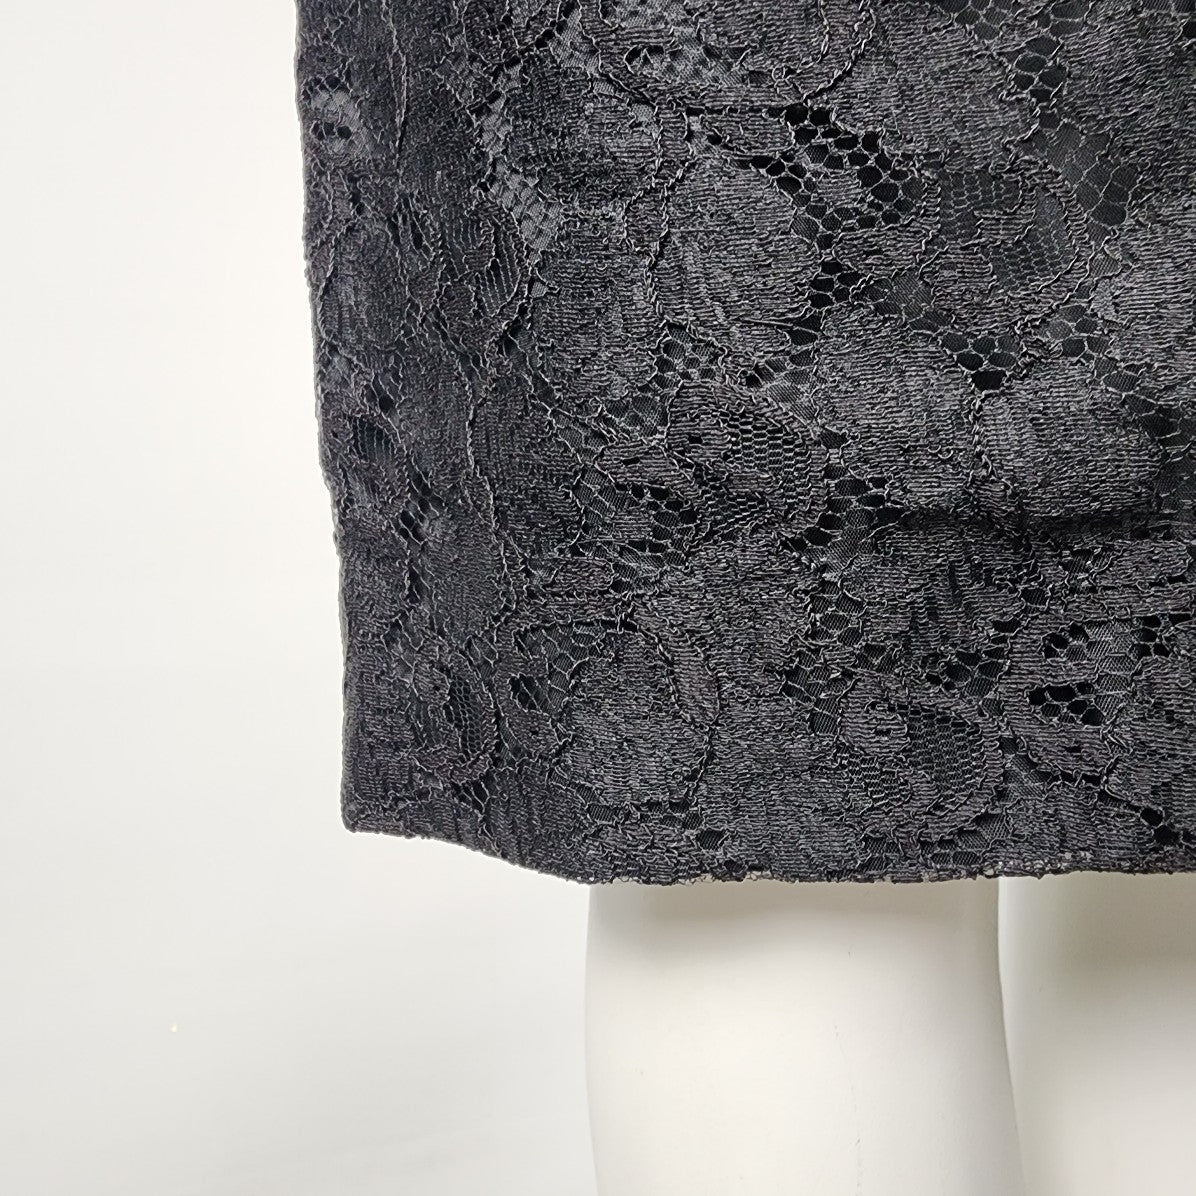 Vintage Laurence Dress Black Lace Sheath Belted Dress Size S